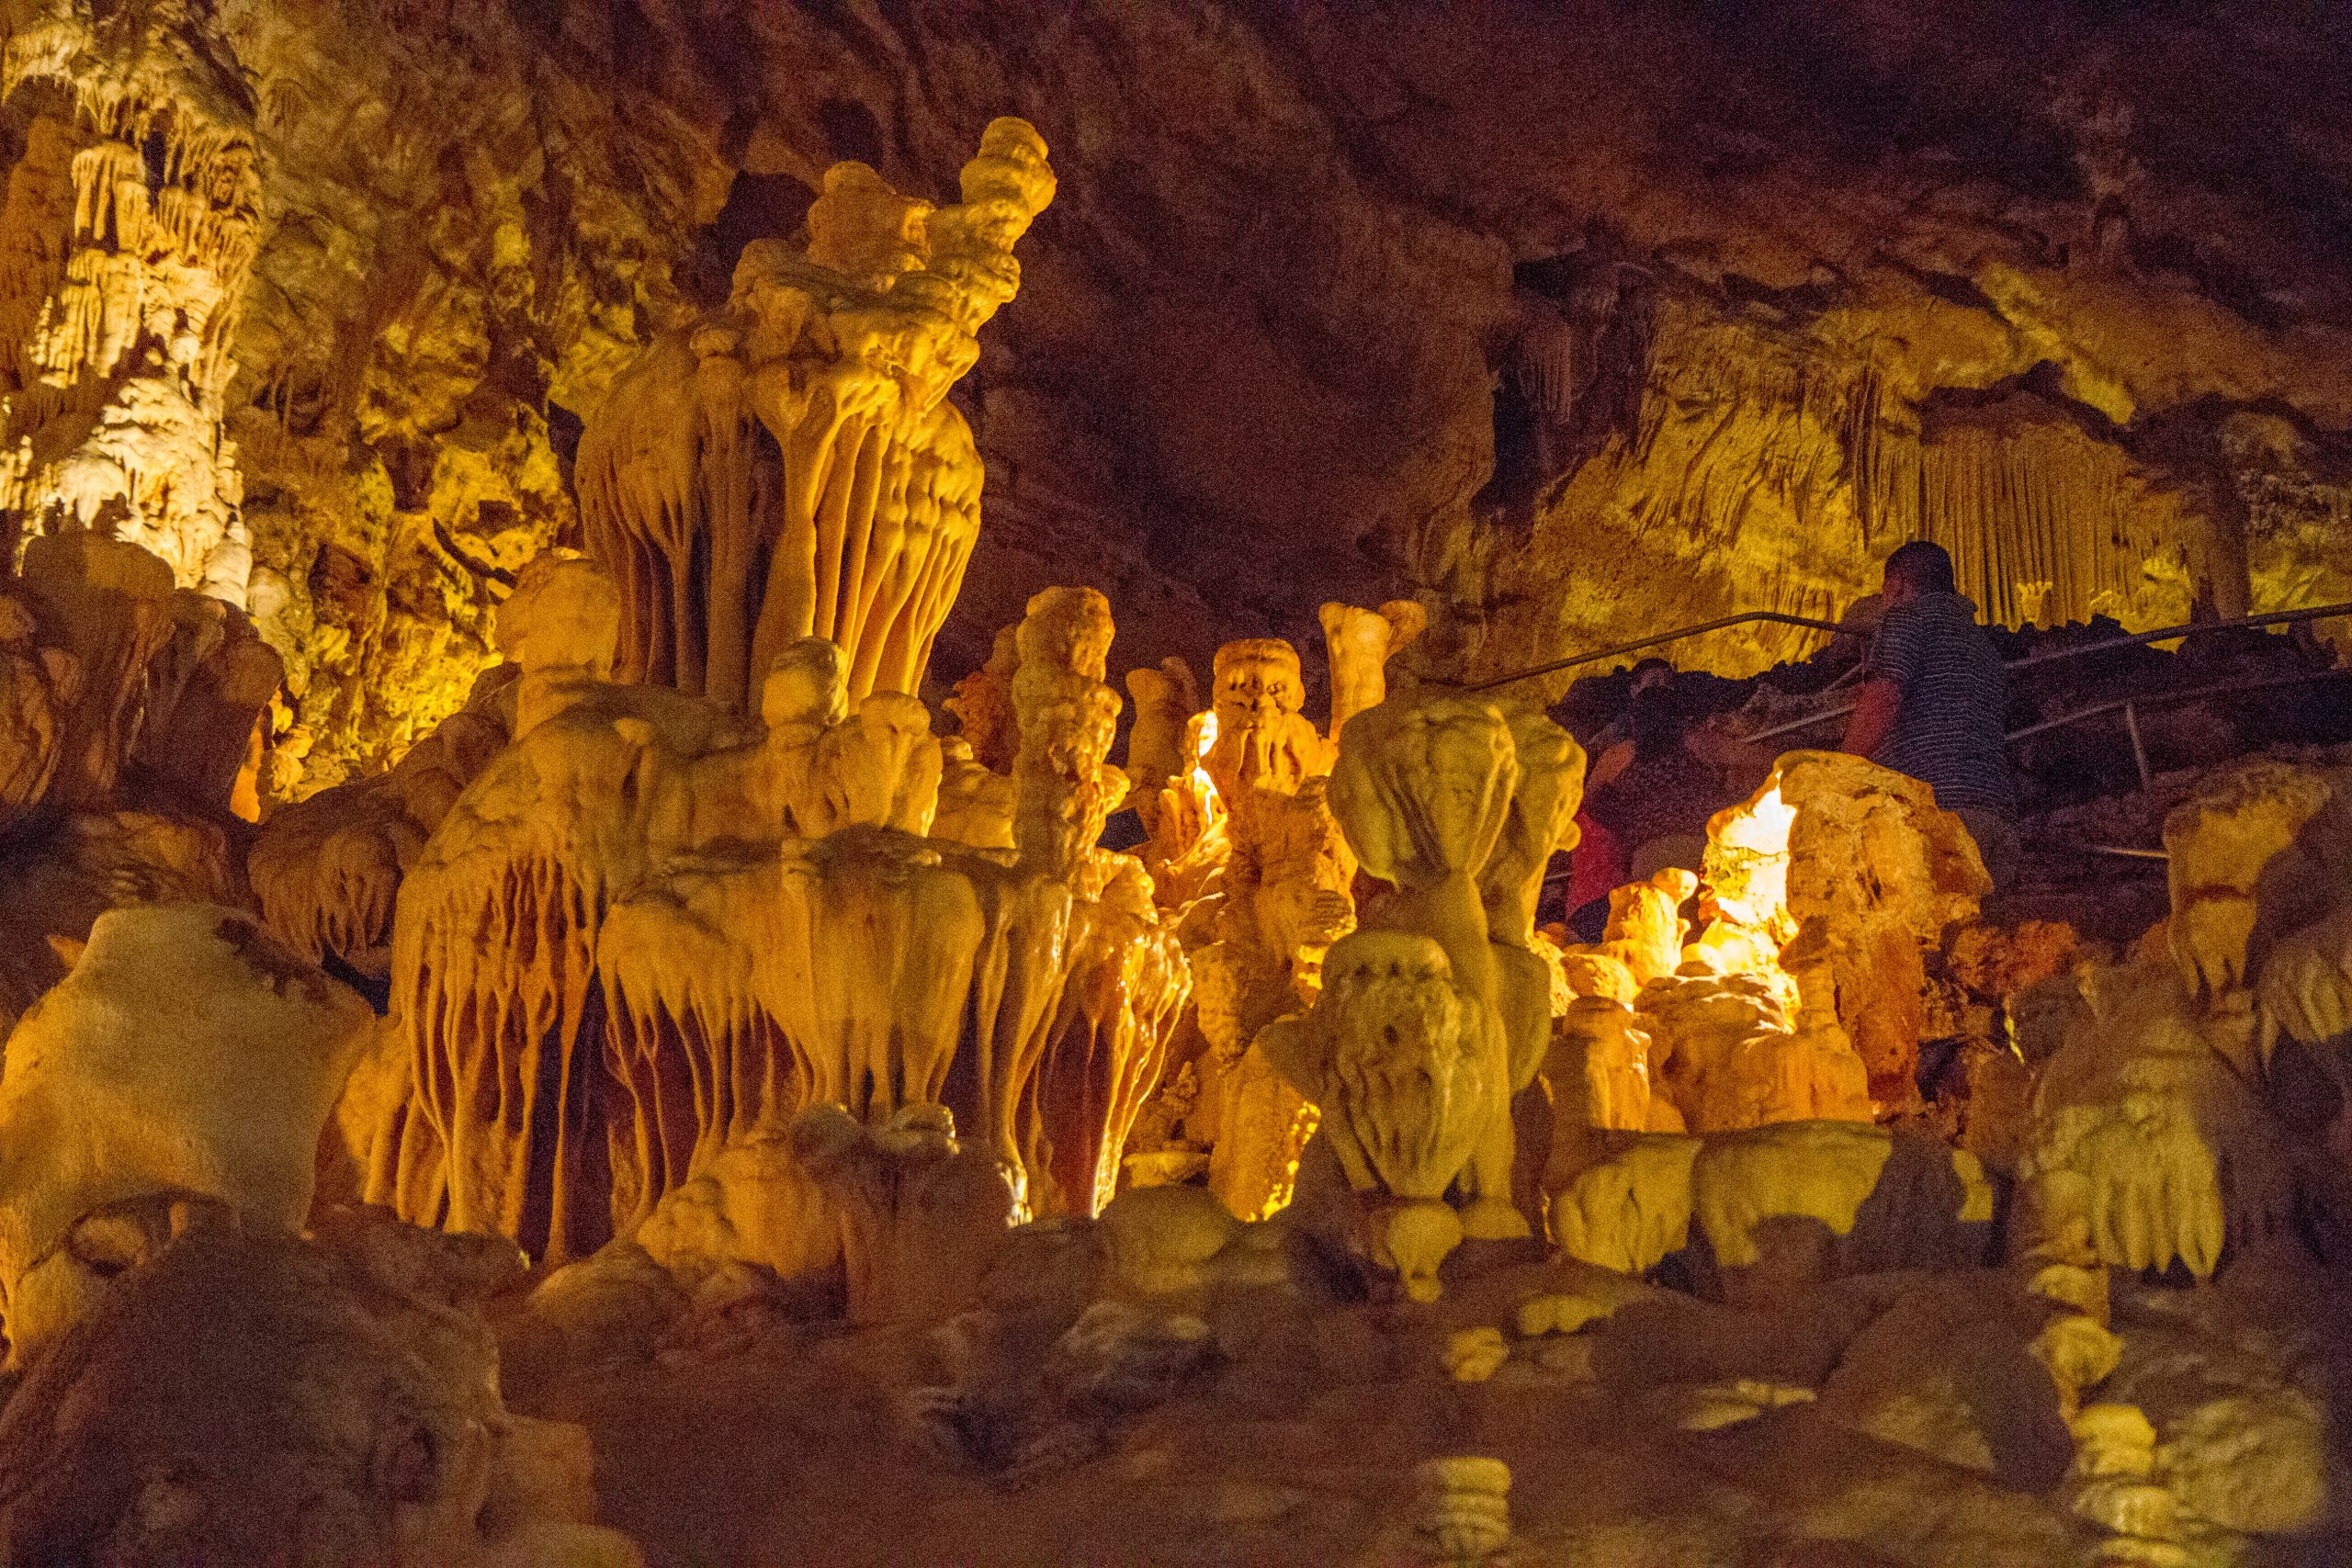 Underground caverns illuminated by artificial light